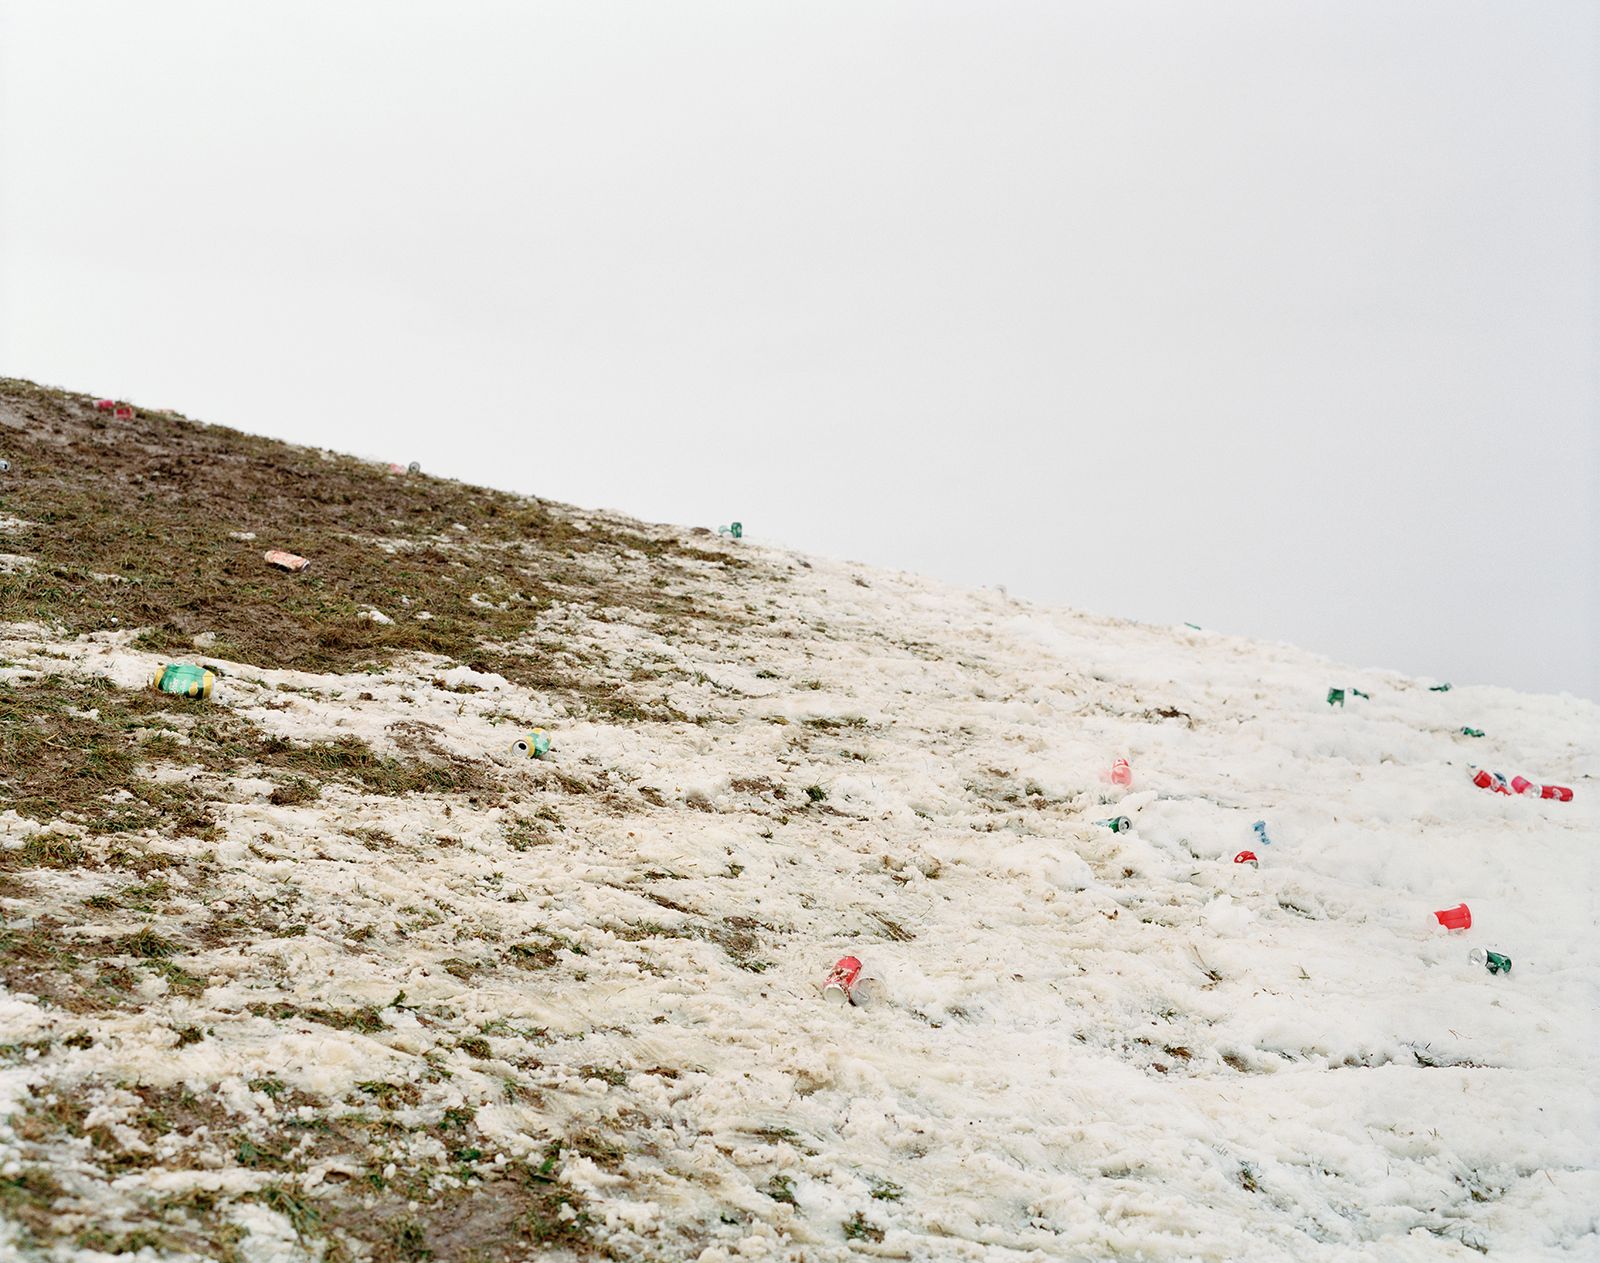 © Nicolò Panzeri & Mattia Micheli - Garbage left along the ski slope by the audience of Hahnenkamm race. Kitzbuhel, Austria, 2020.